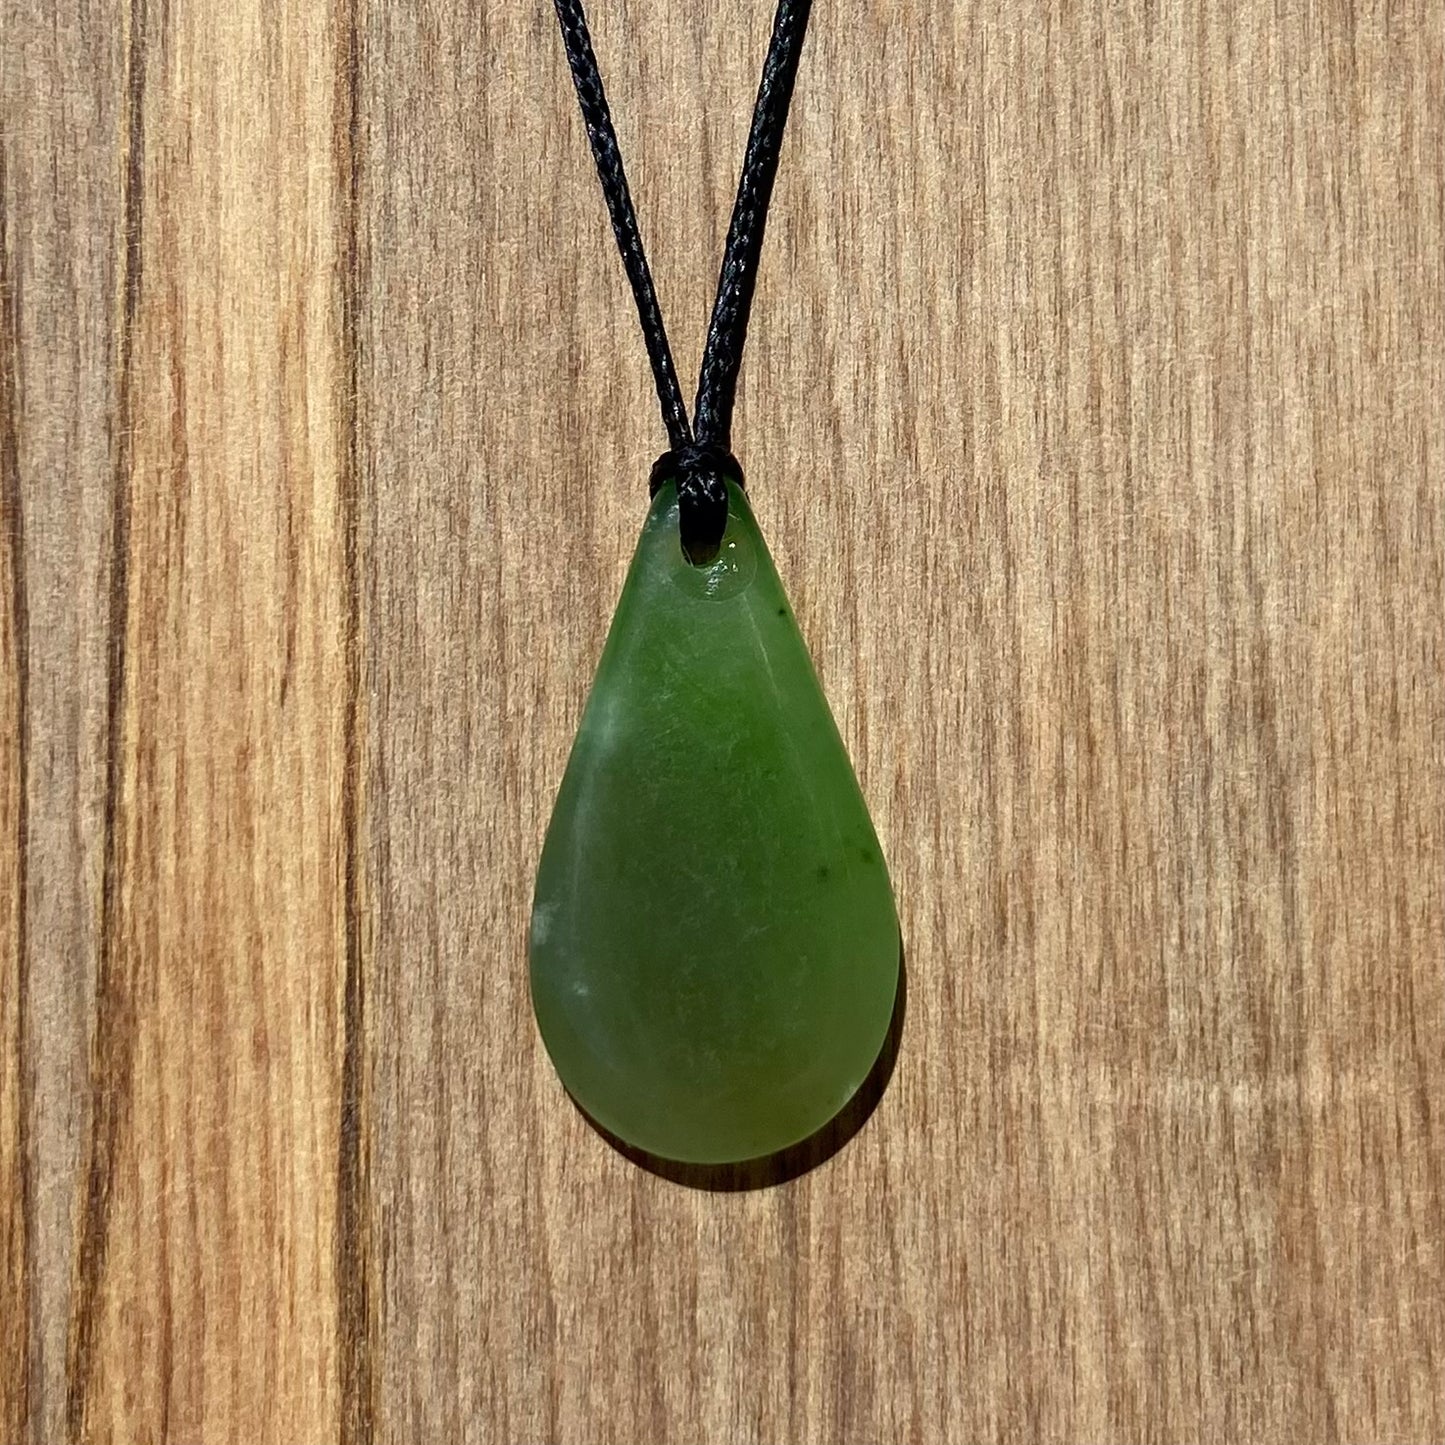 Roimata (drop) pendant hand-carved from New Zealand kahurangi pounamu (greenstone). Back.